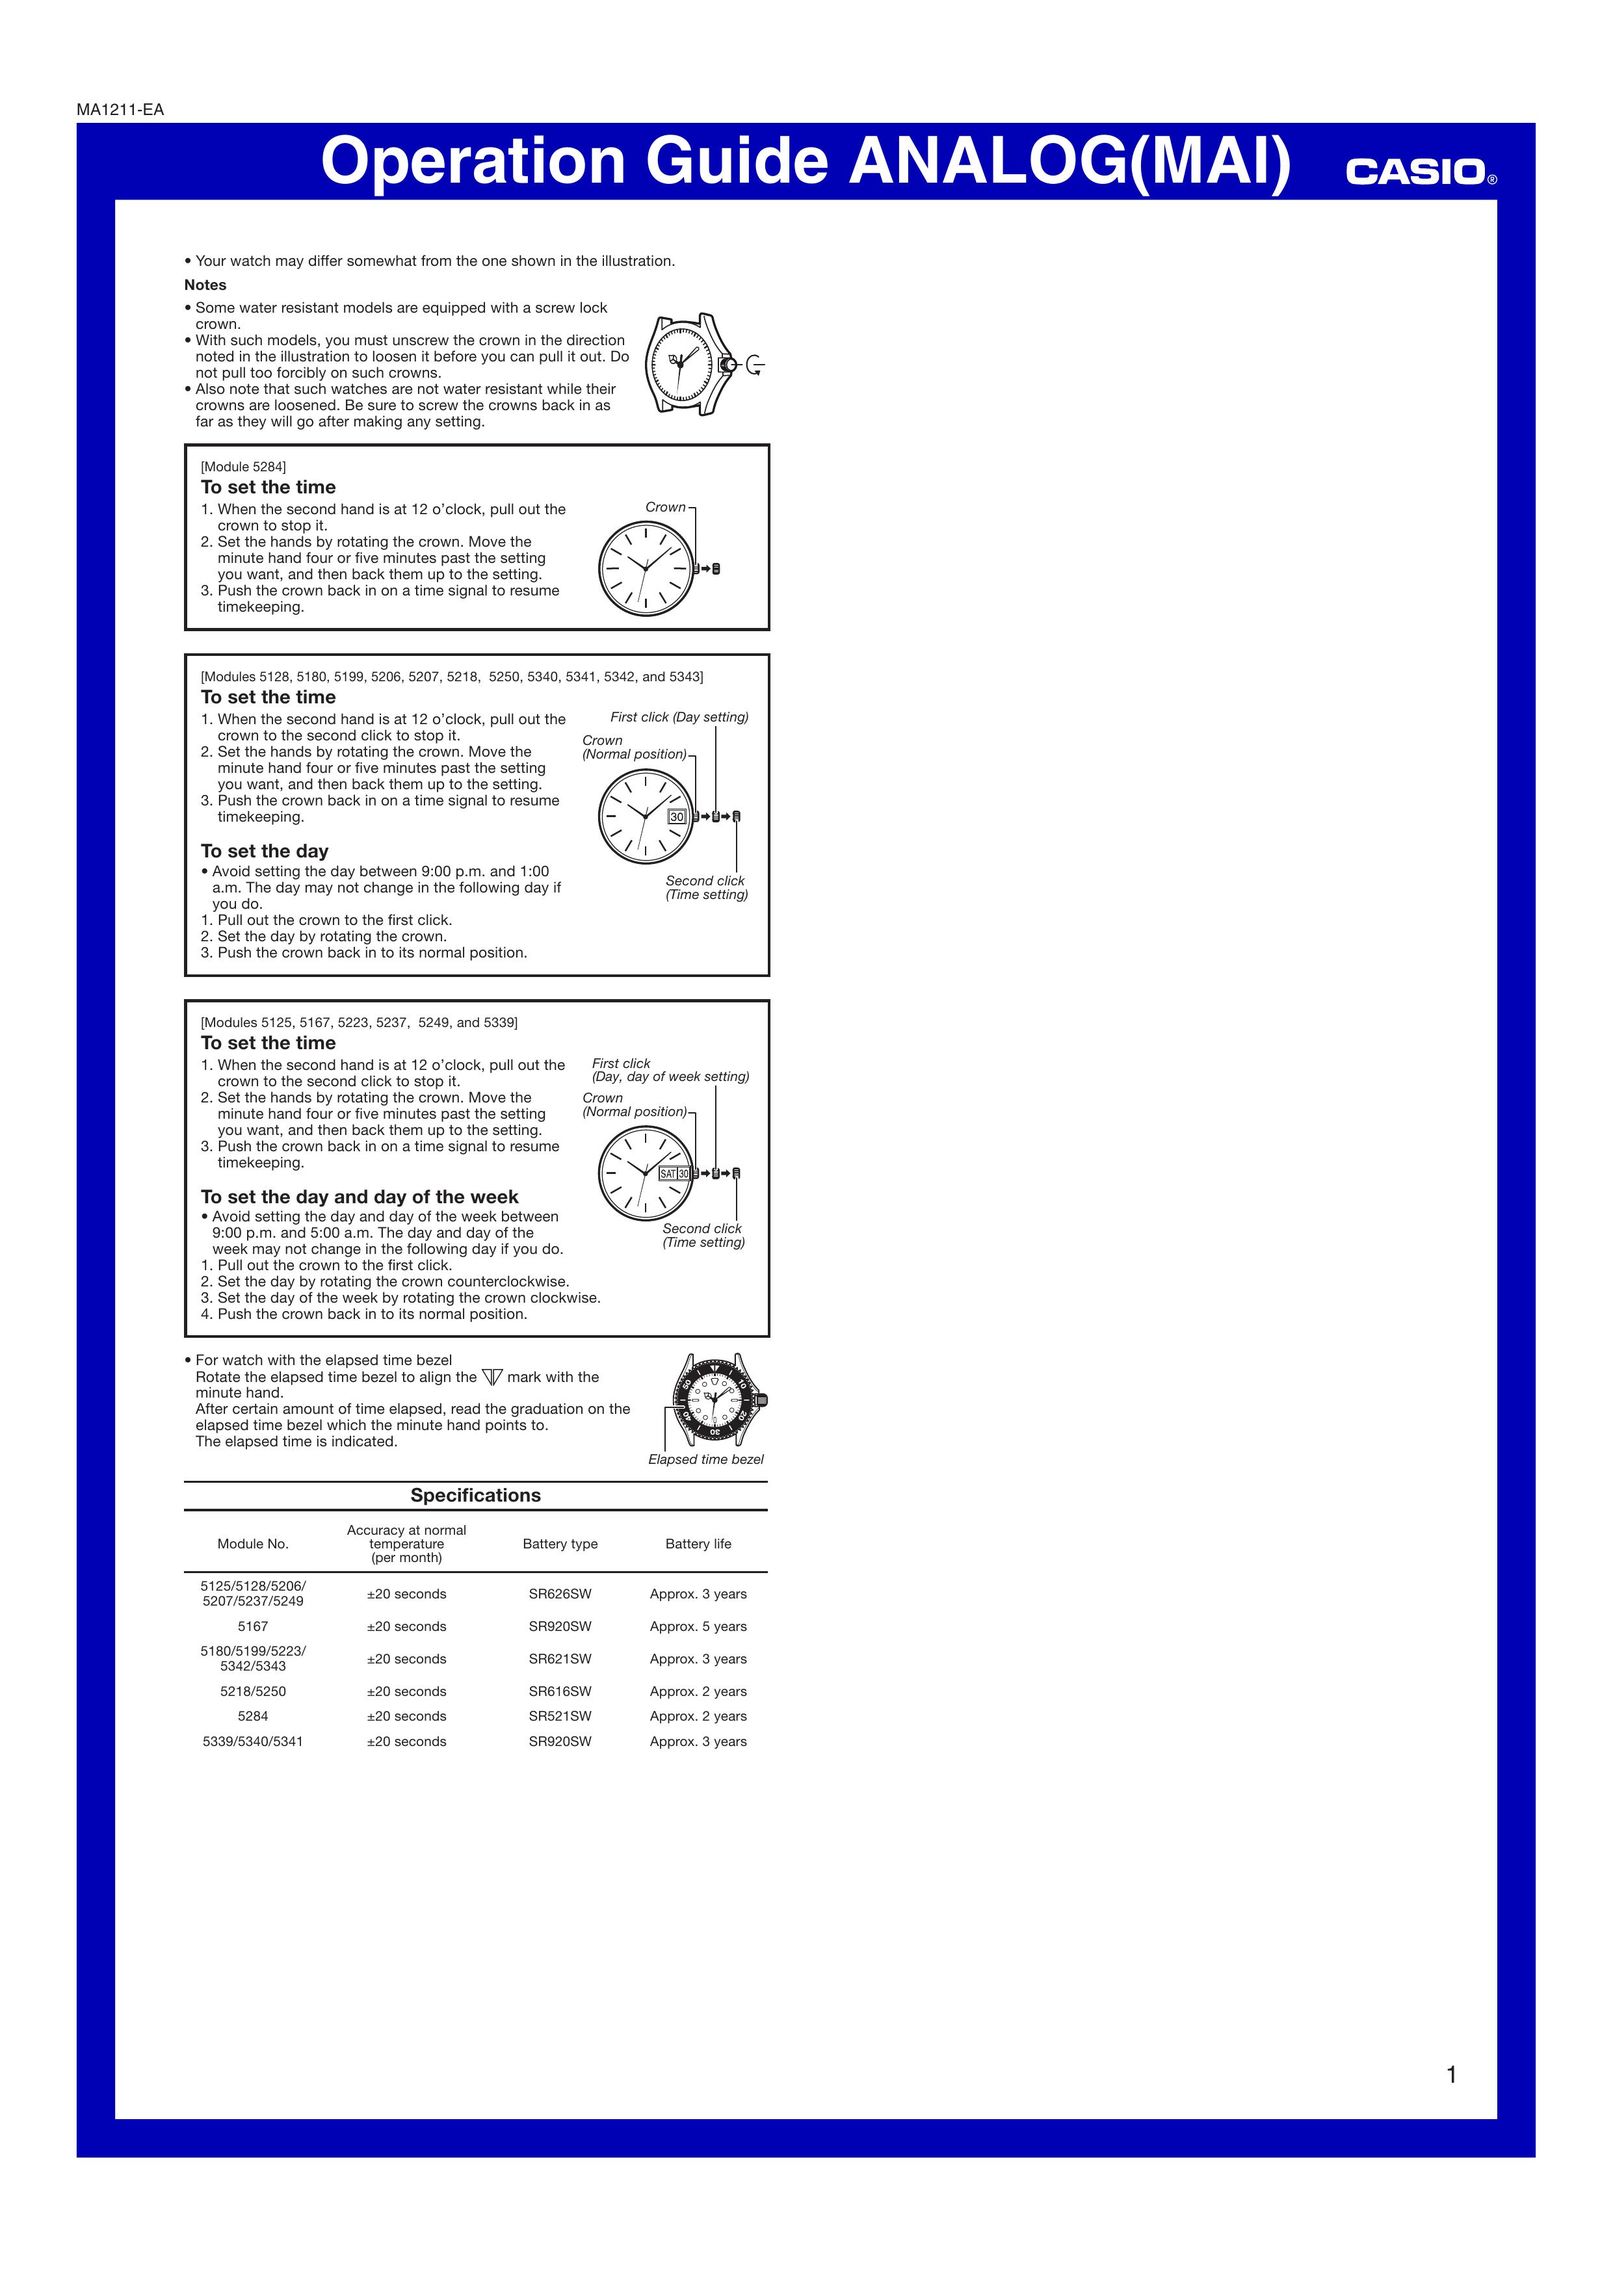 Casio MA1211-EA Clock User Manual